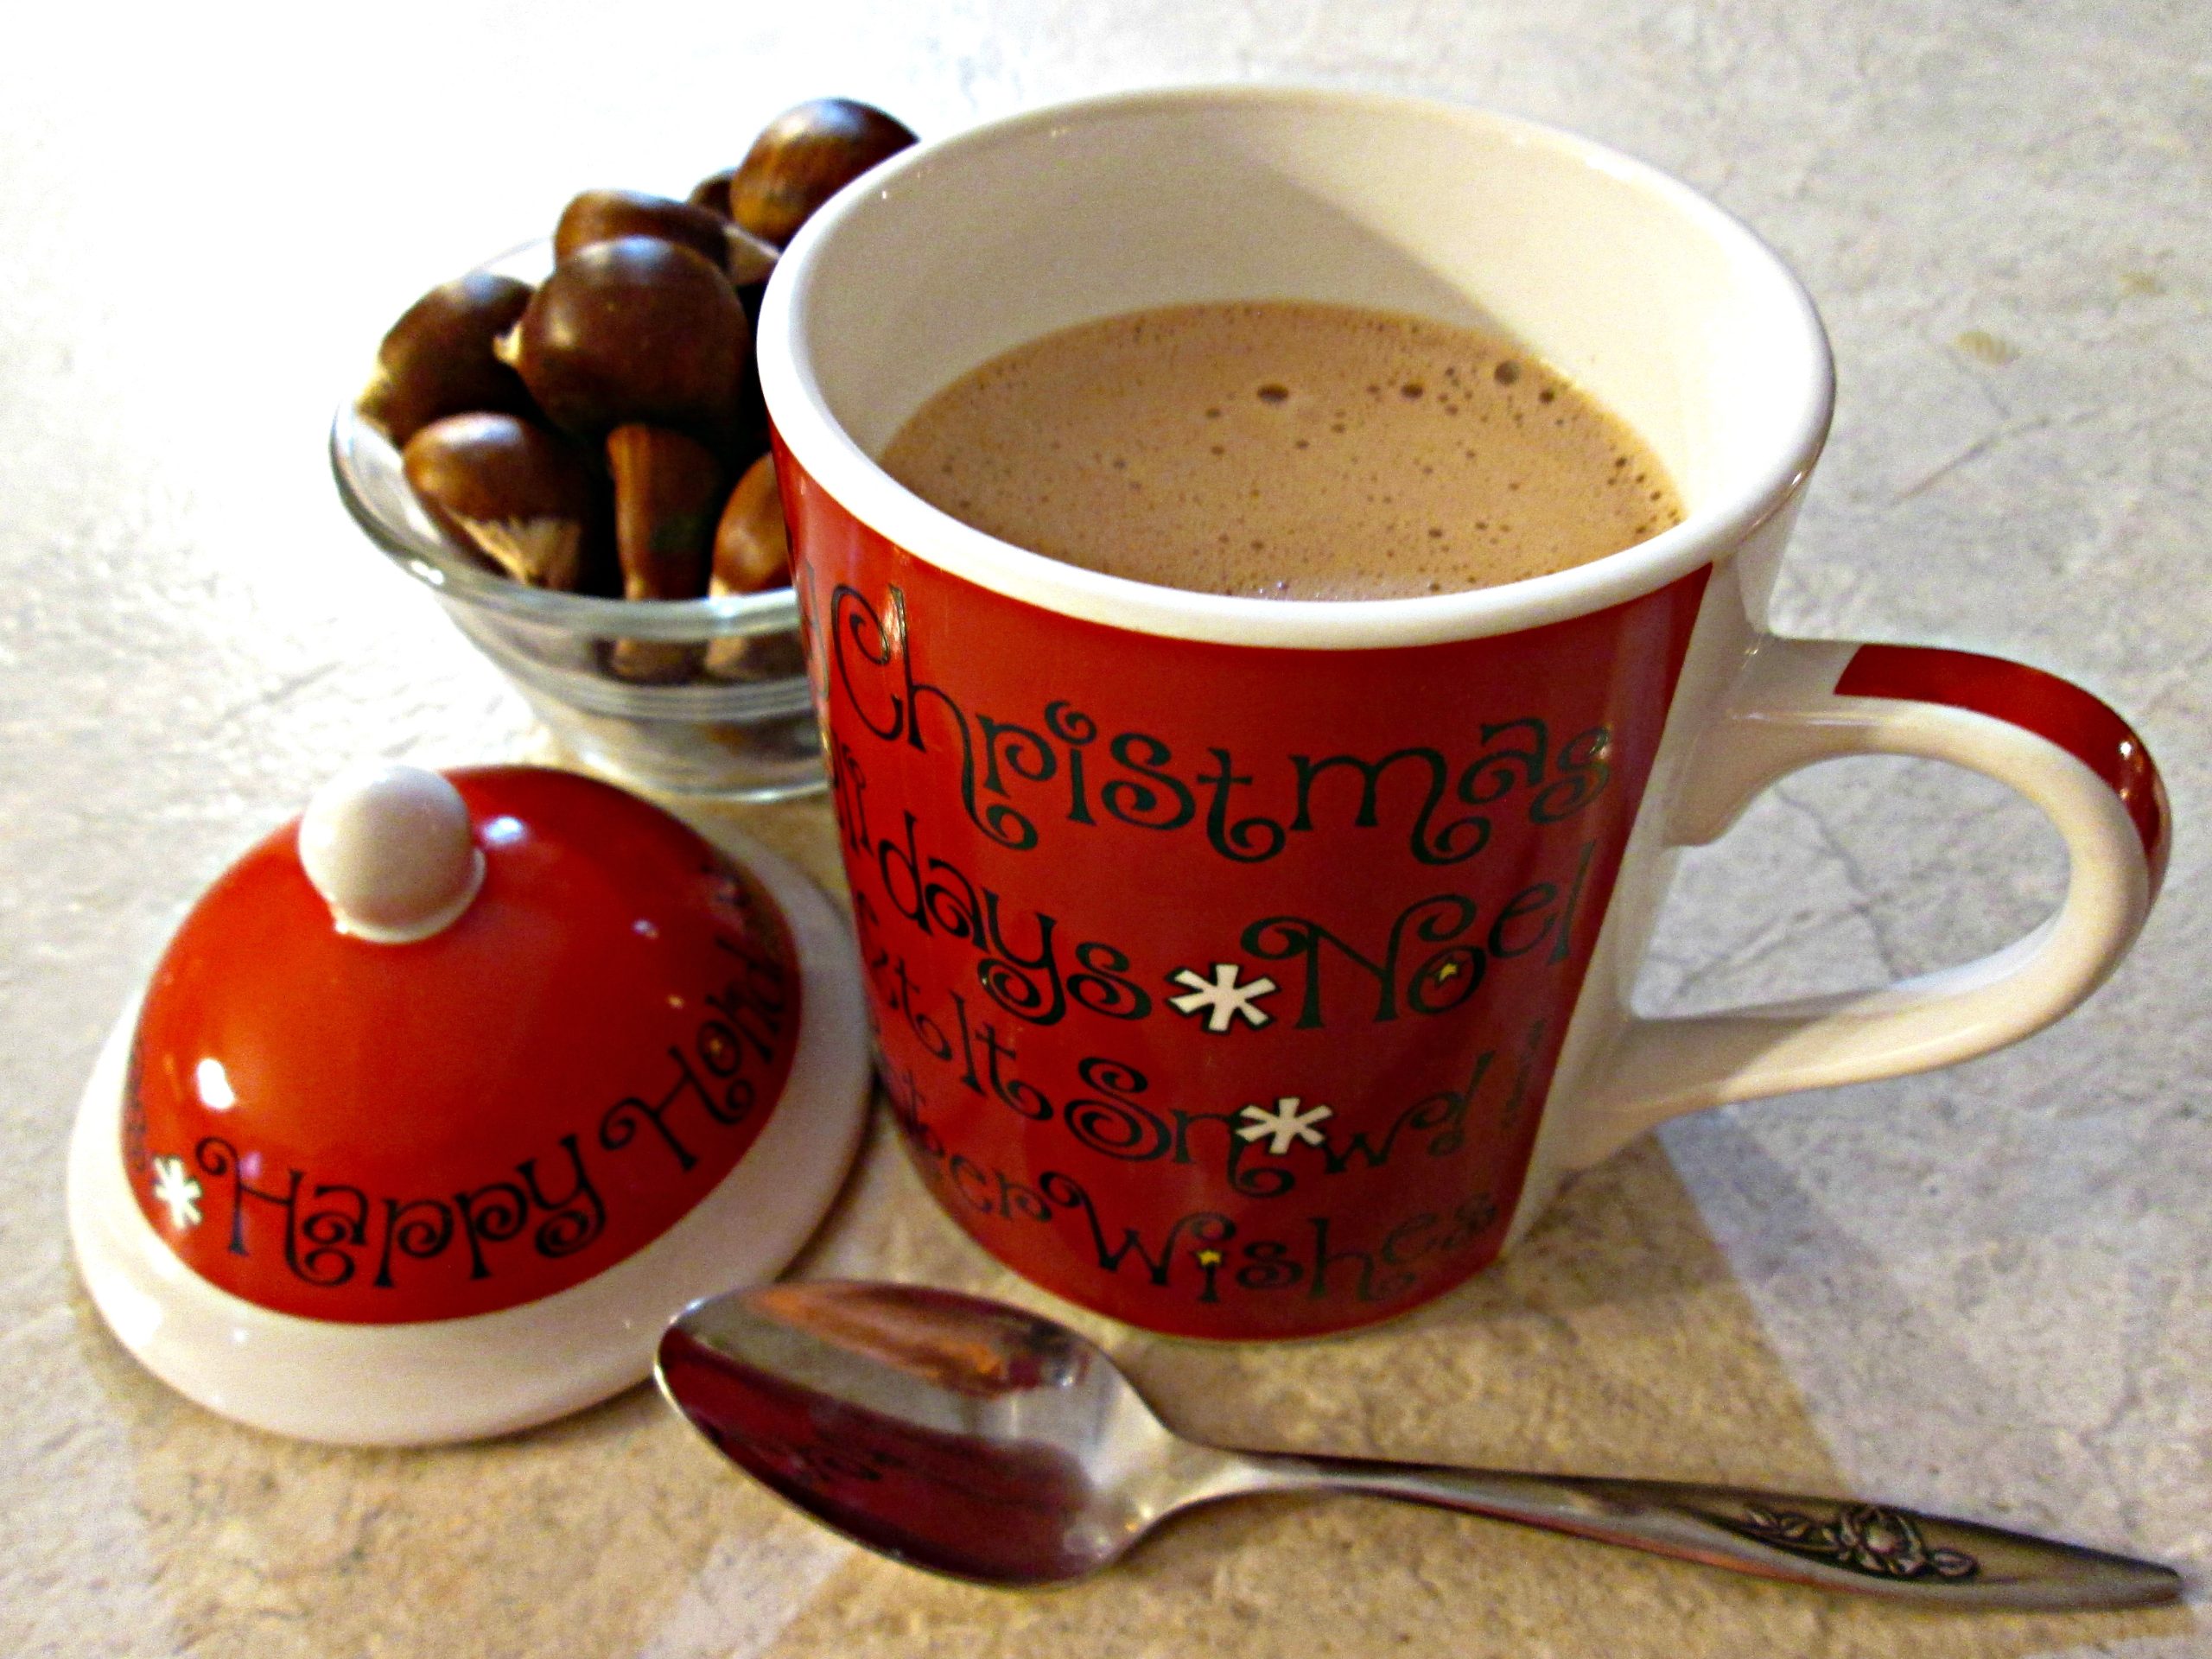 Hot Chocolate with Marshmallow Cream